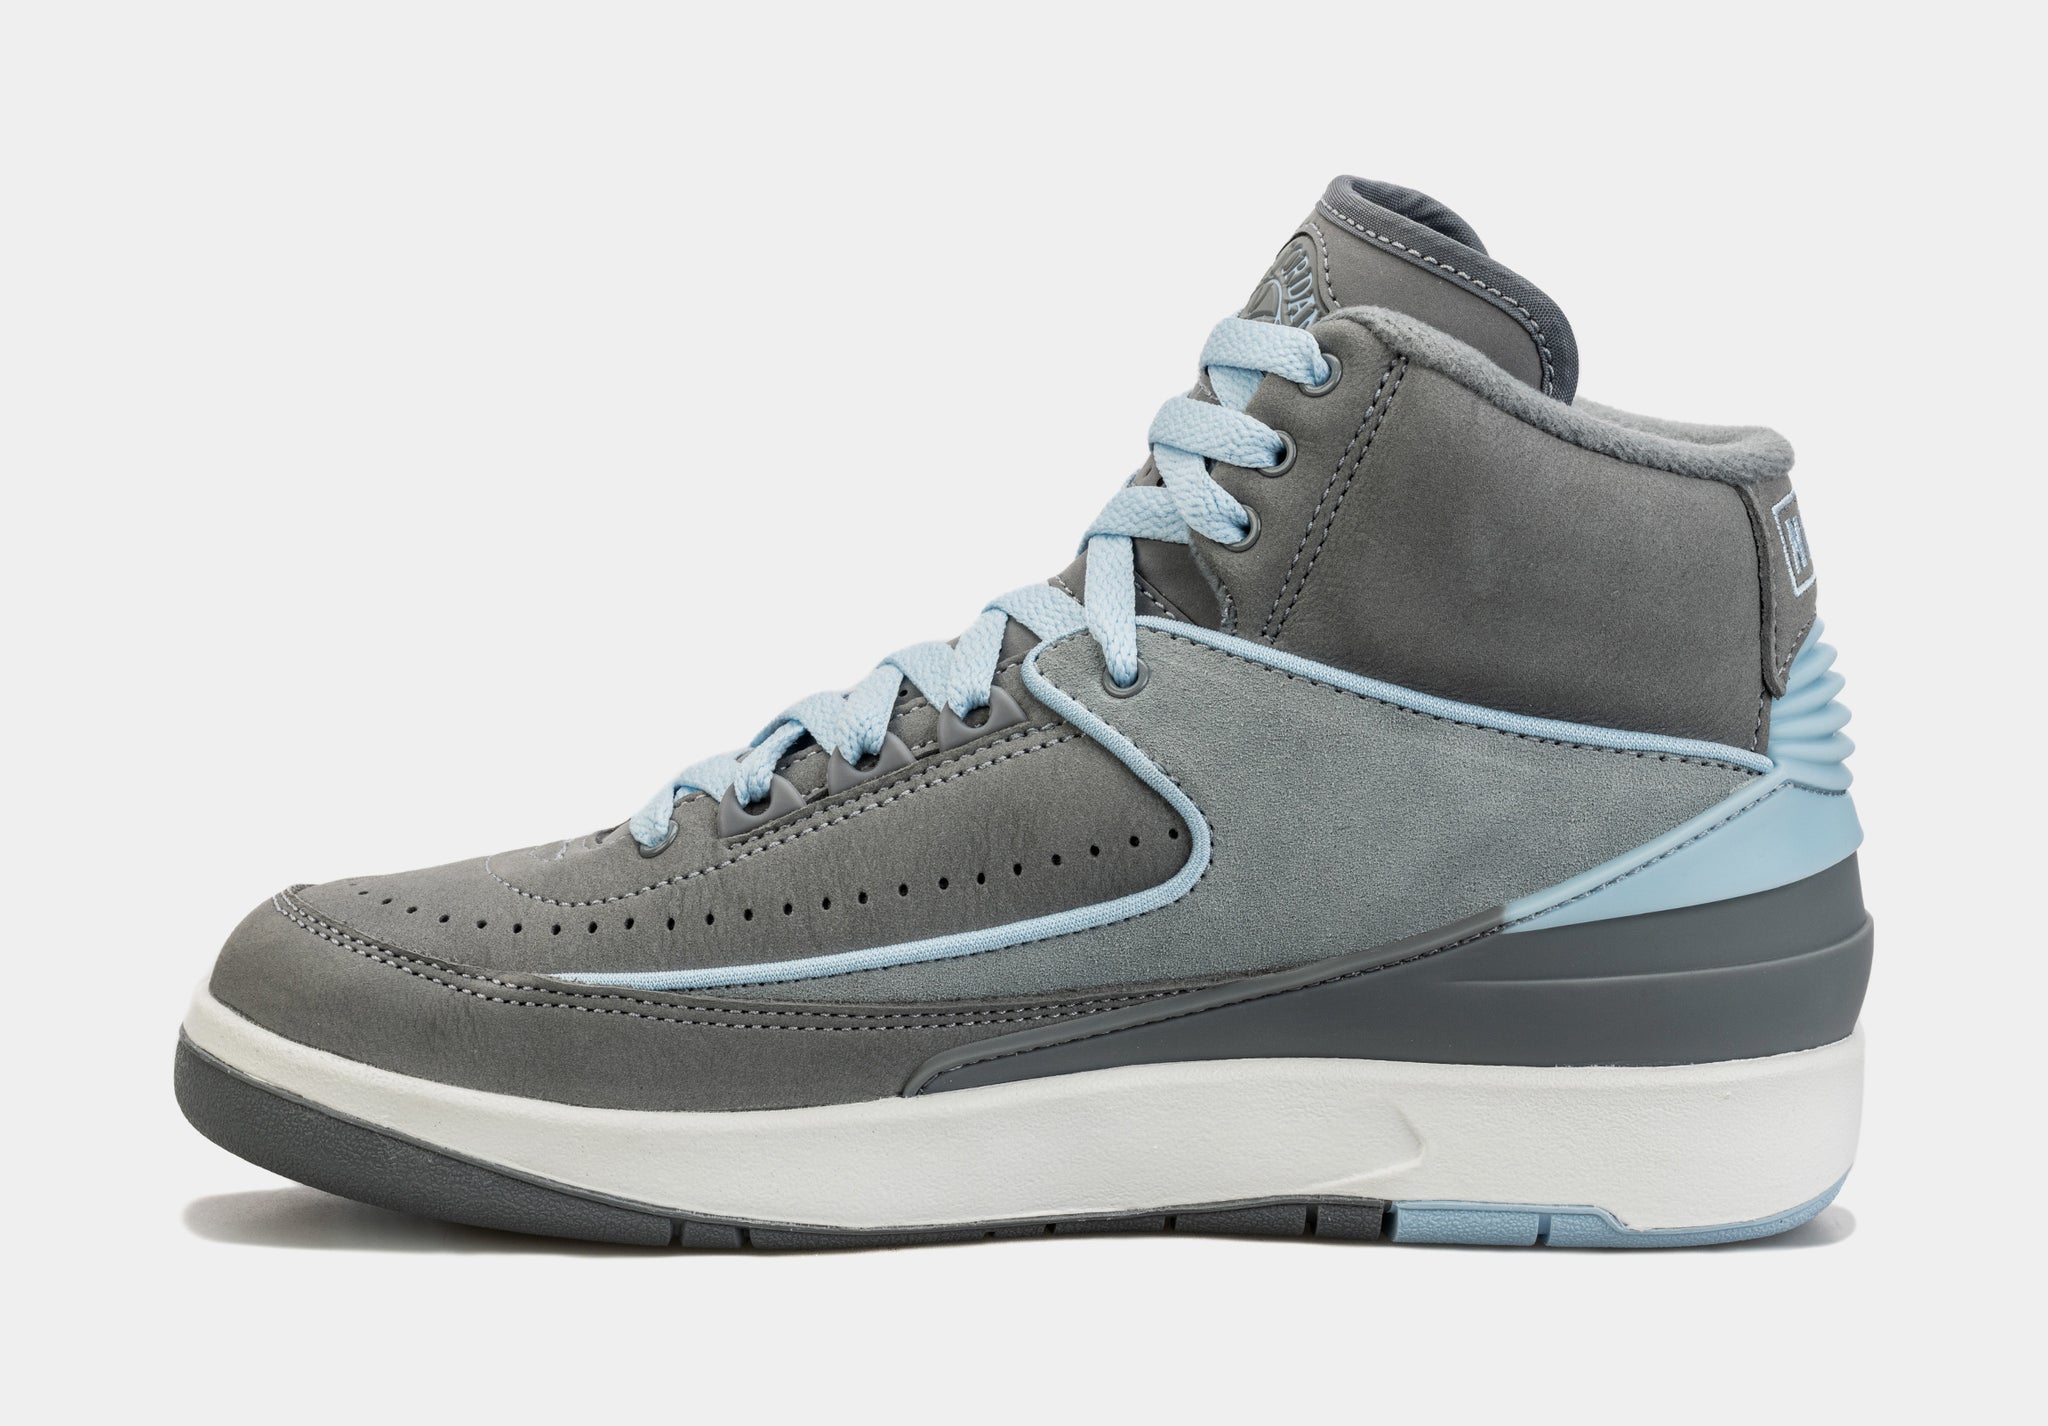 Air Jordan 2 Retro Cool Grey Womens Lifestyle Shoes (Grey/Blue)